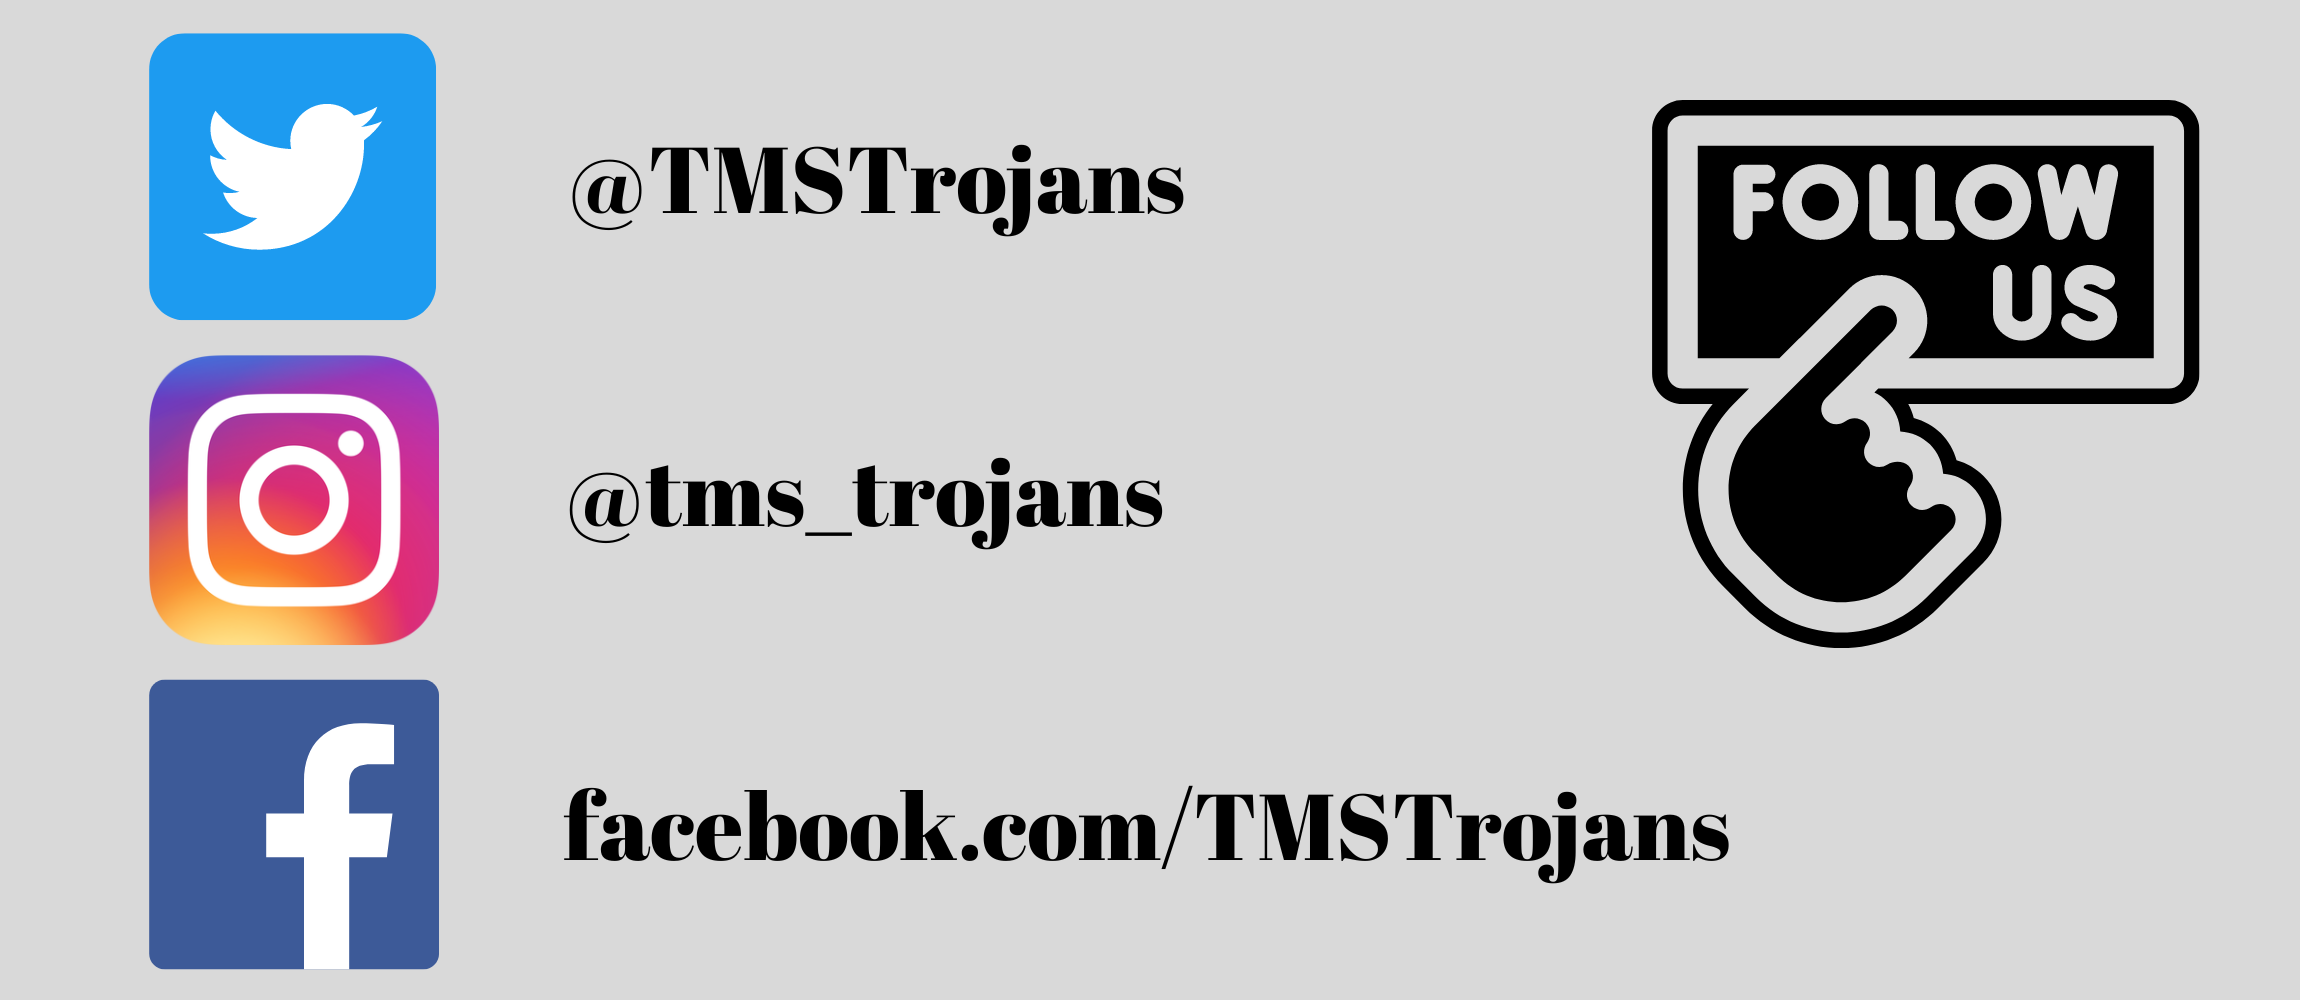 follow us on social media  twitter @TMSTrojans  instagram @tms_trojans  facebook.com/TMSTrojans